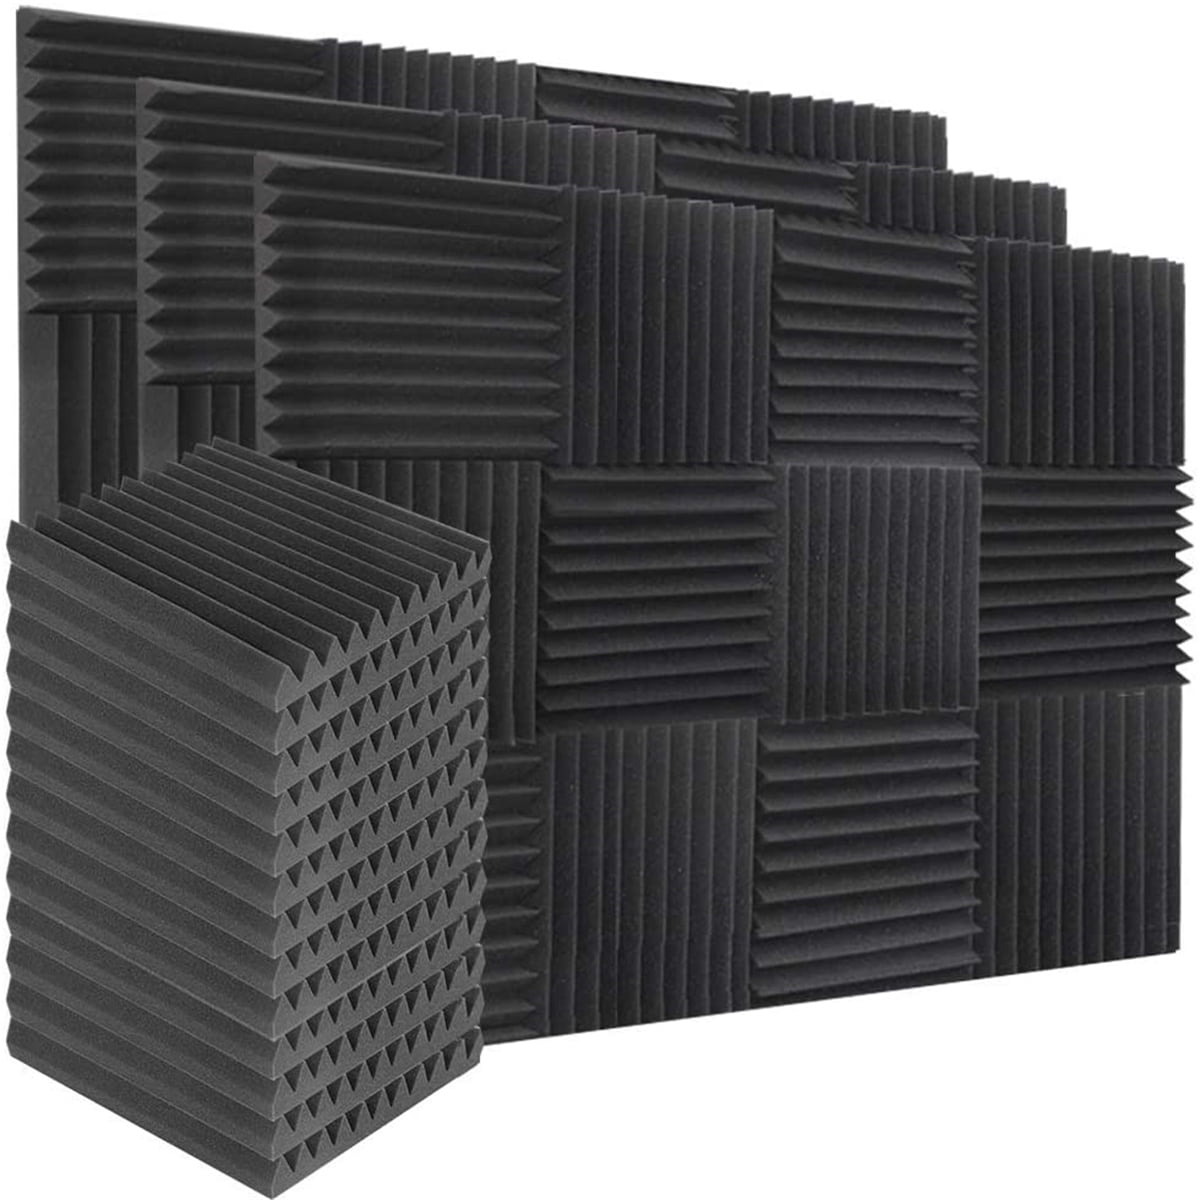 Acoustic Foam High Density Panels Soundproof Wedges 12 Pack Acoustic Panels 1 X 12 X 12 Inches Charcoal Studio Foam Wedges 